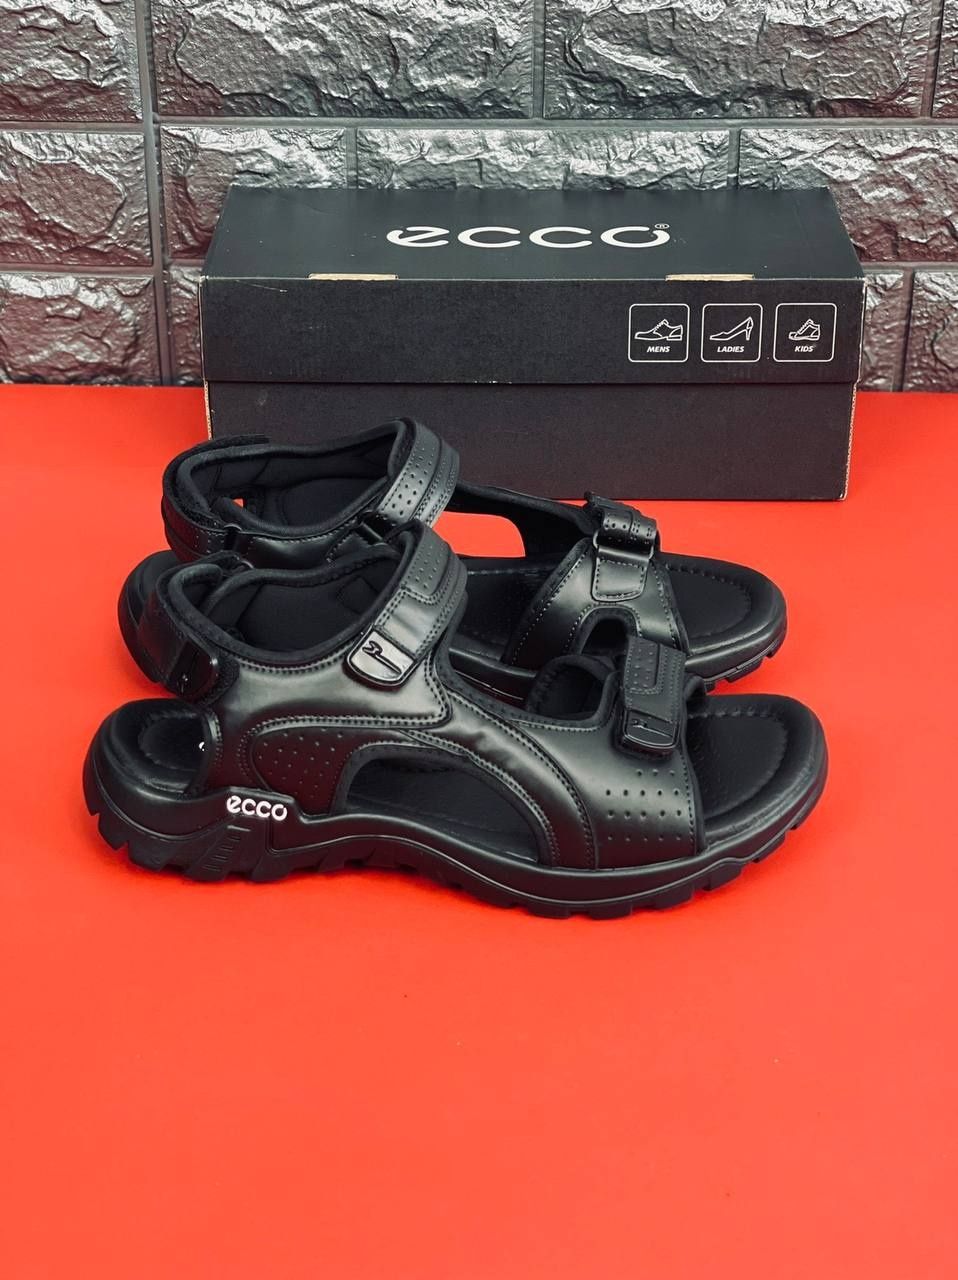 Мужские сандалии чёрного цвета ECCO сандалии на липучке 40-45